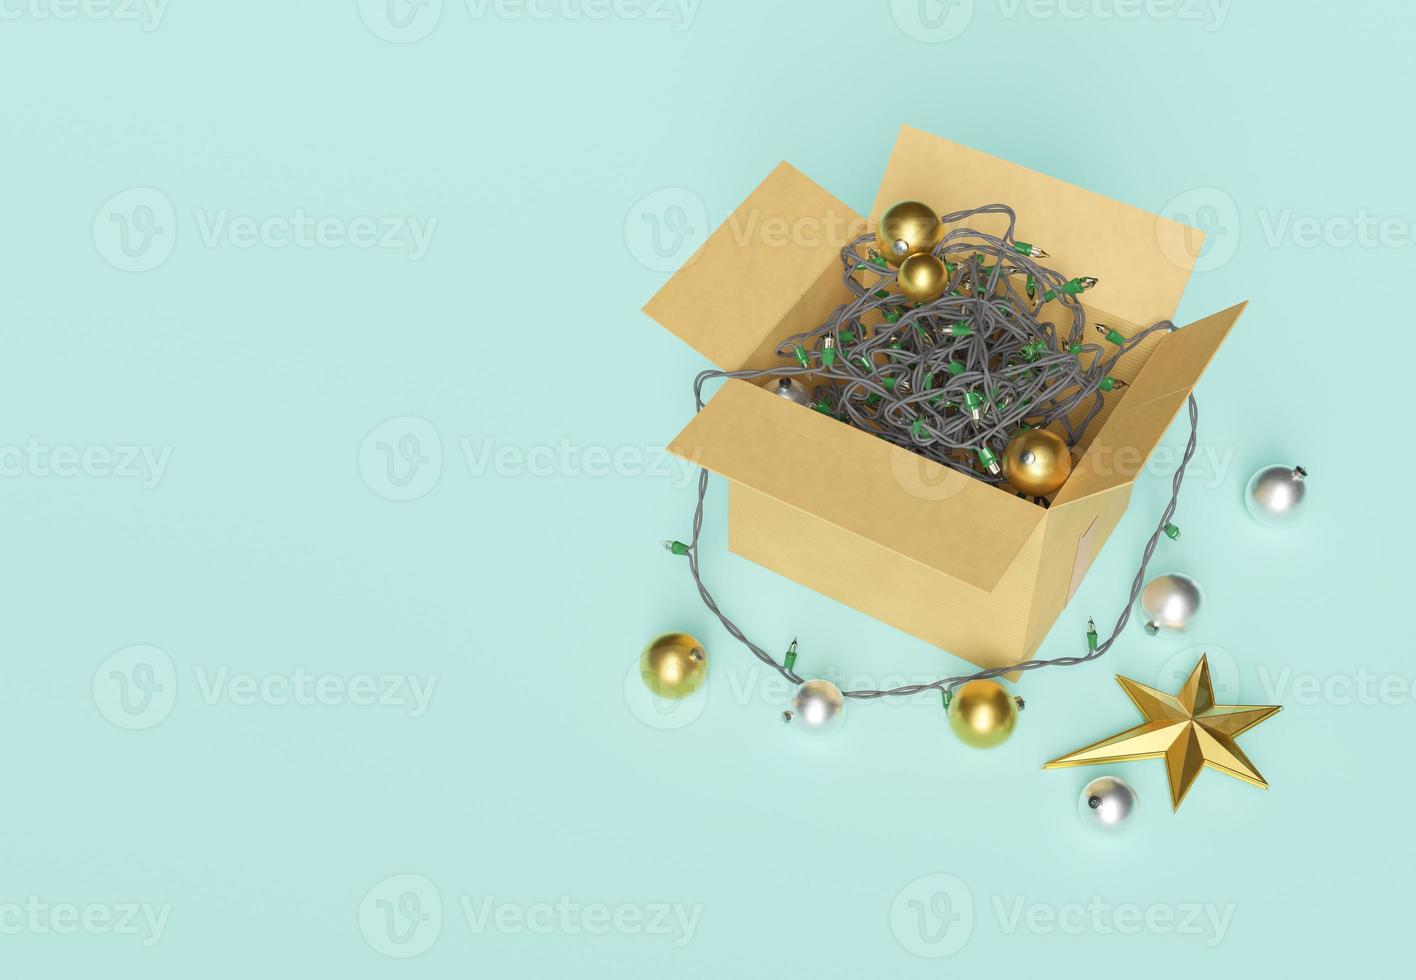 caixa aberta de decorações de natal foto